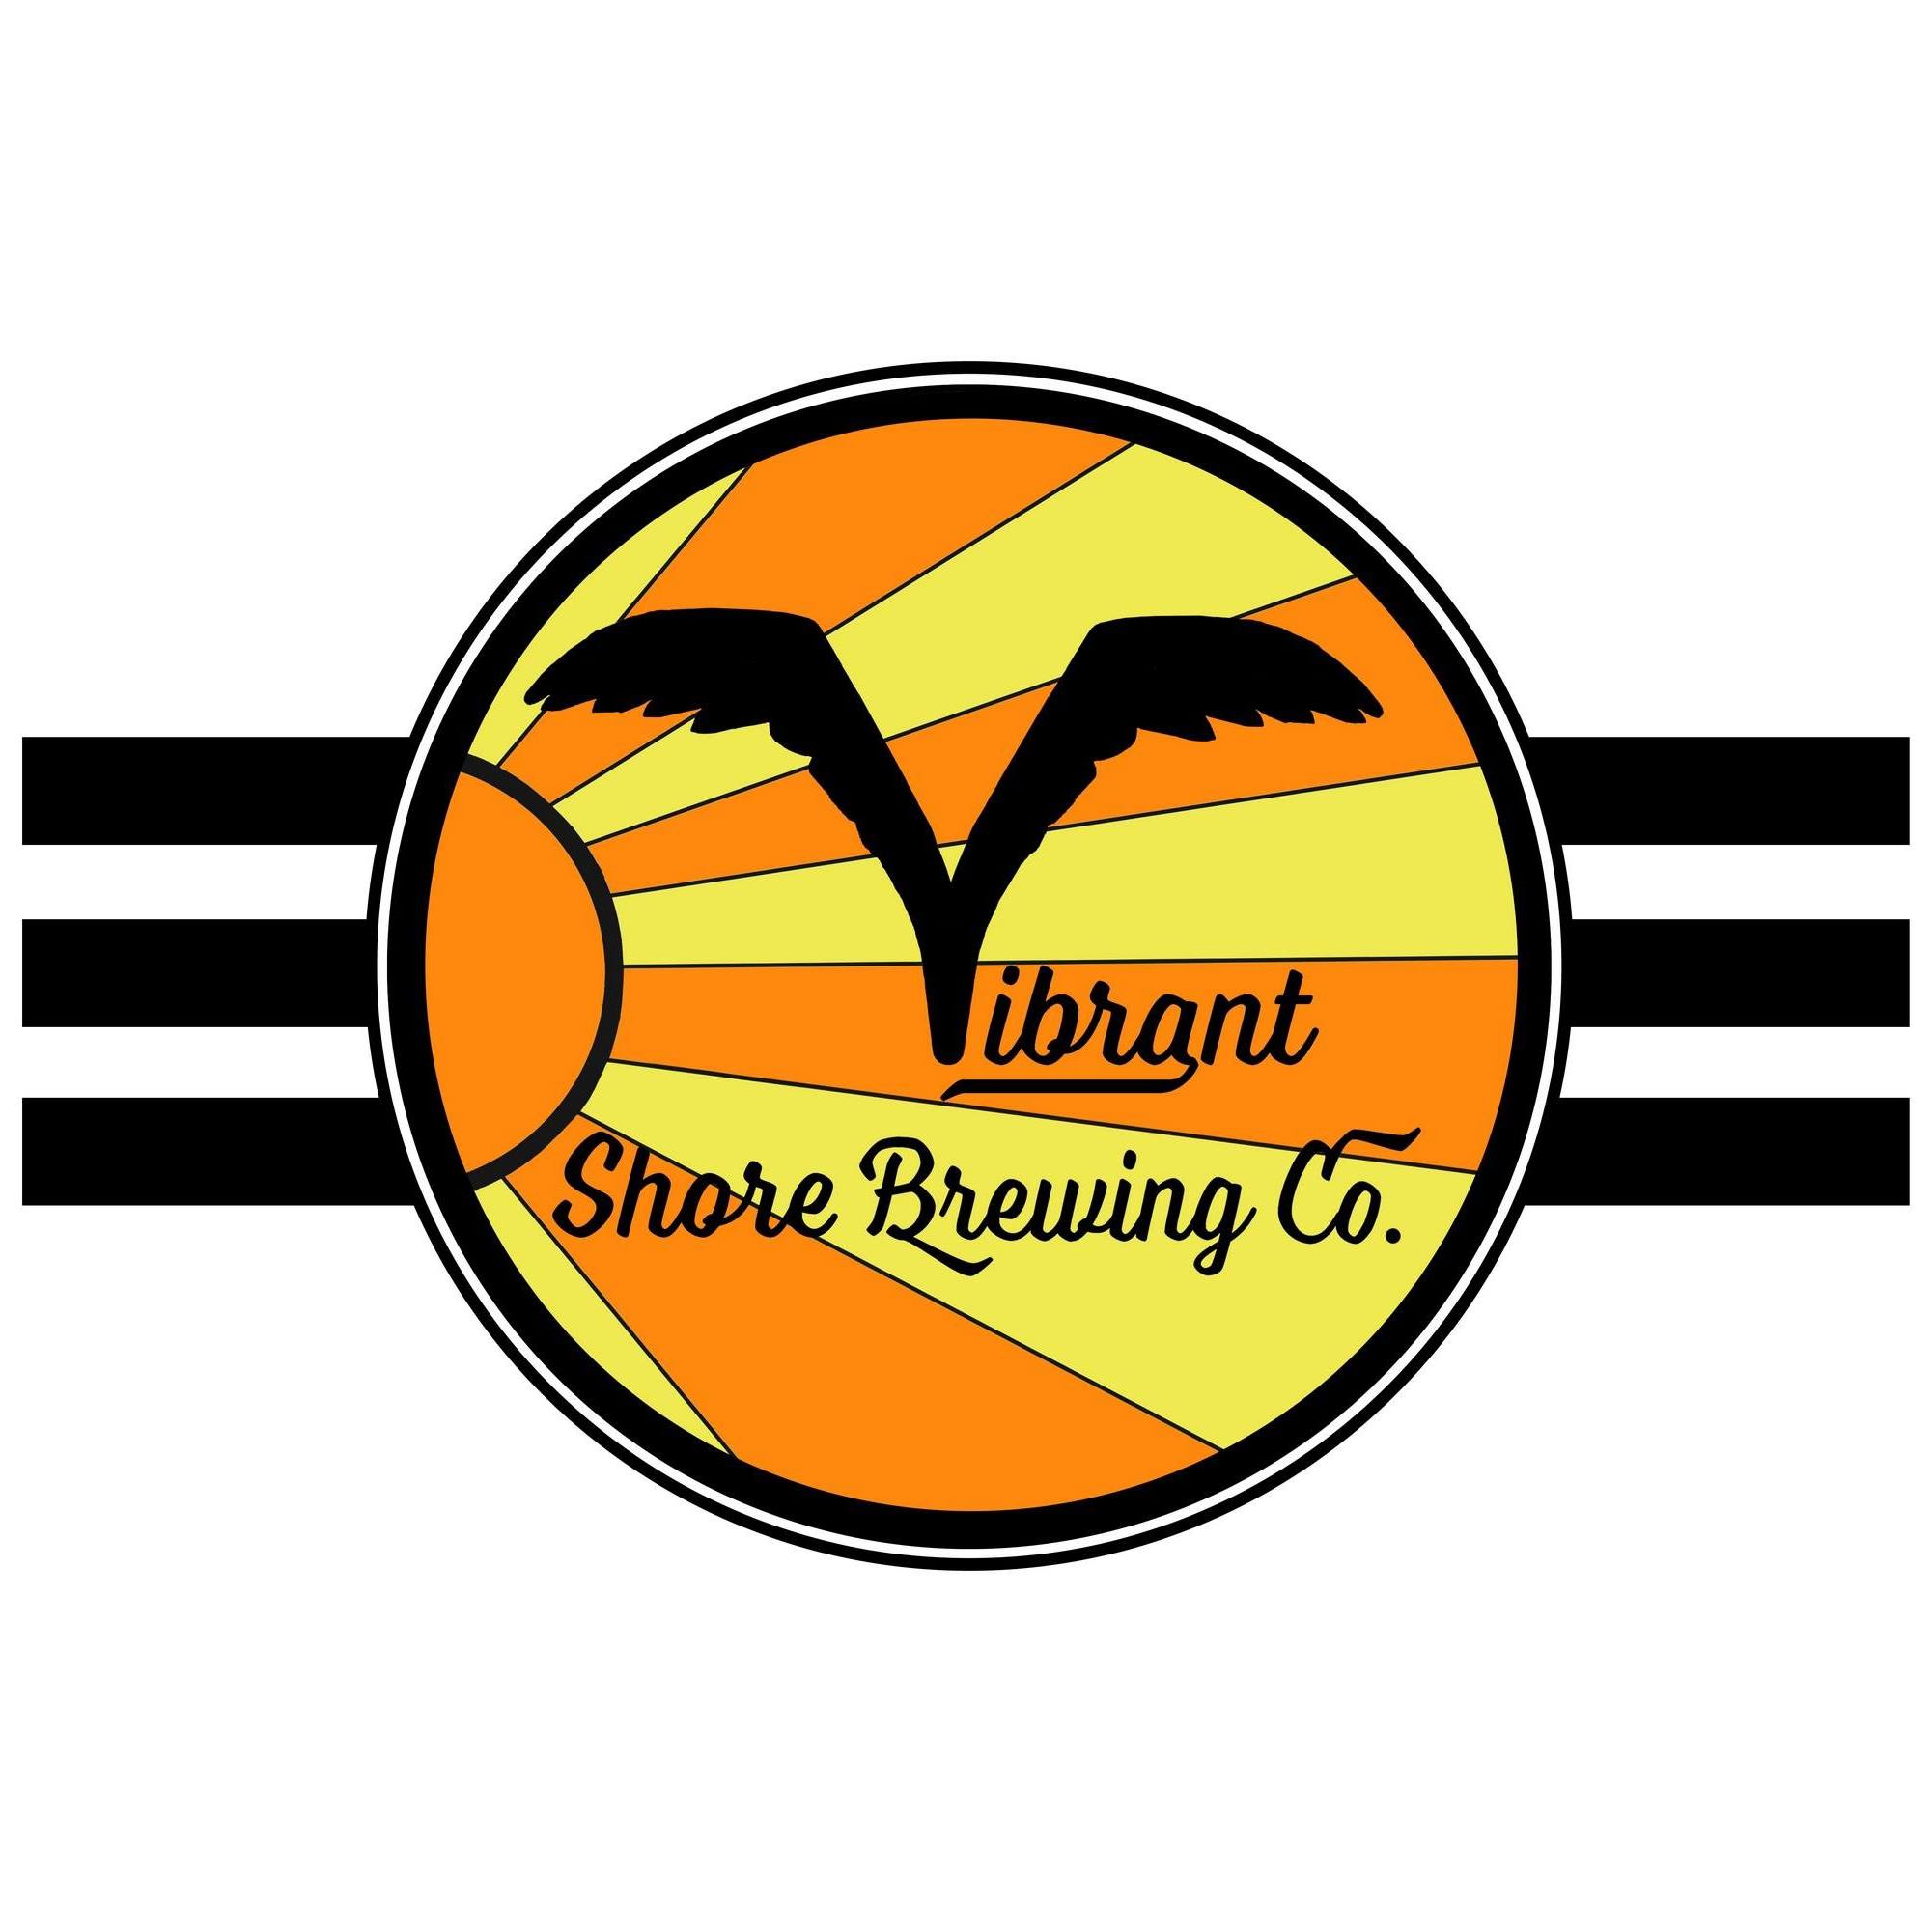 Vibrant Shore Brewing Company